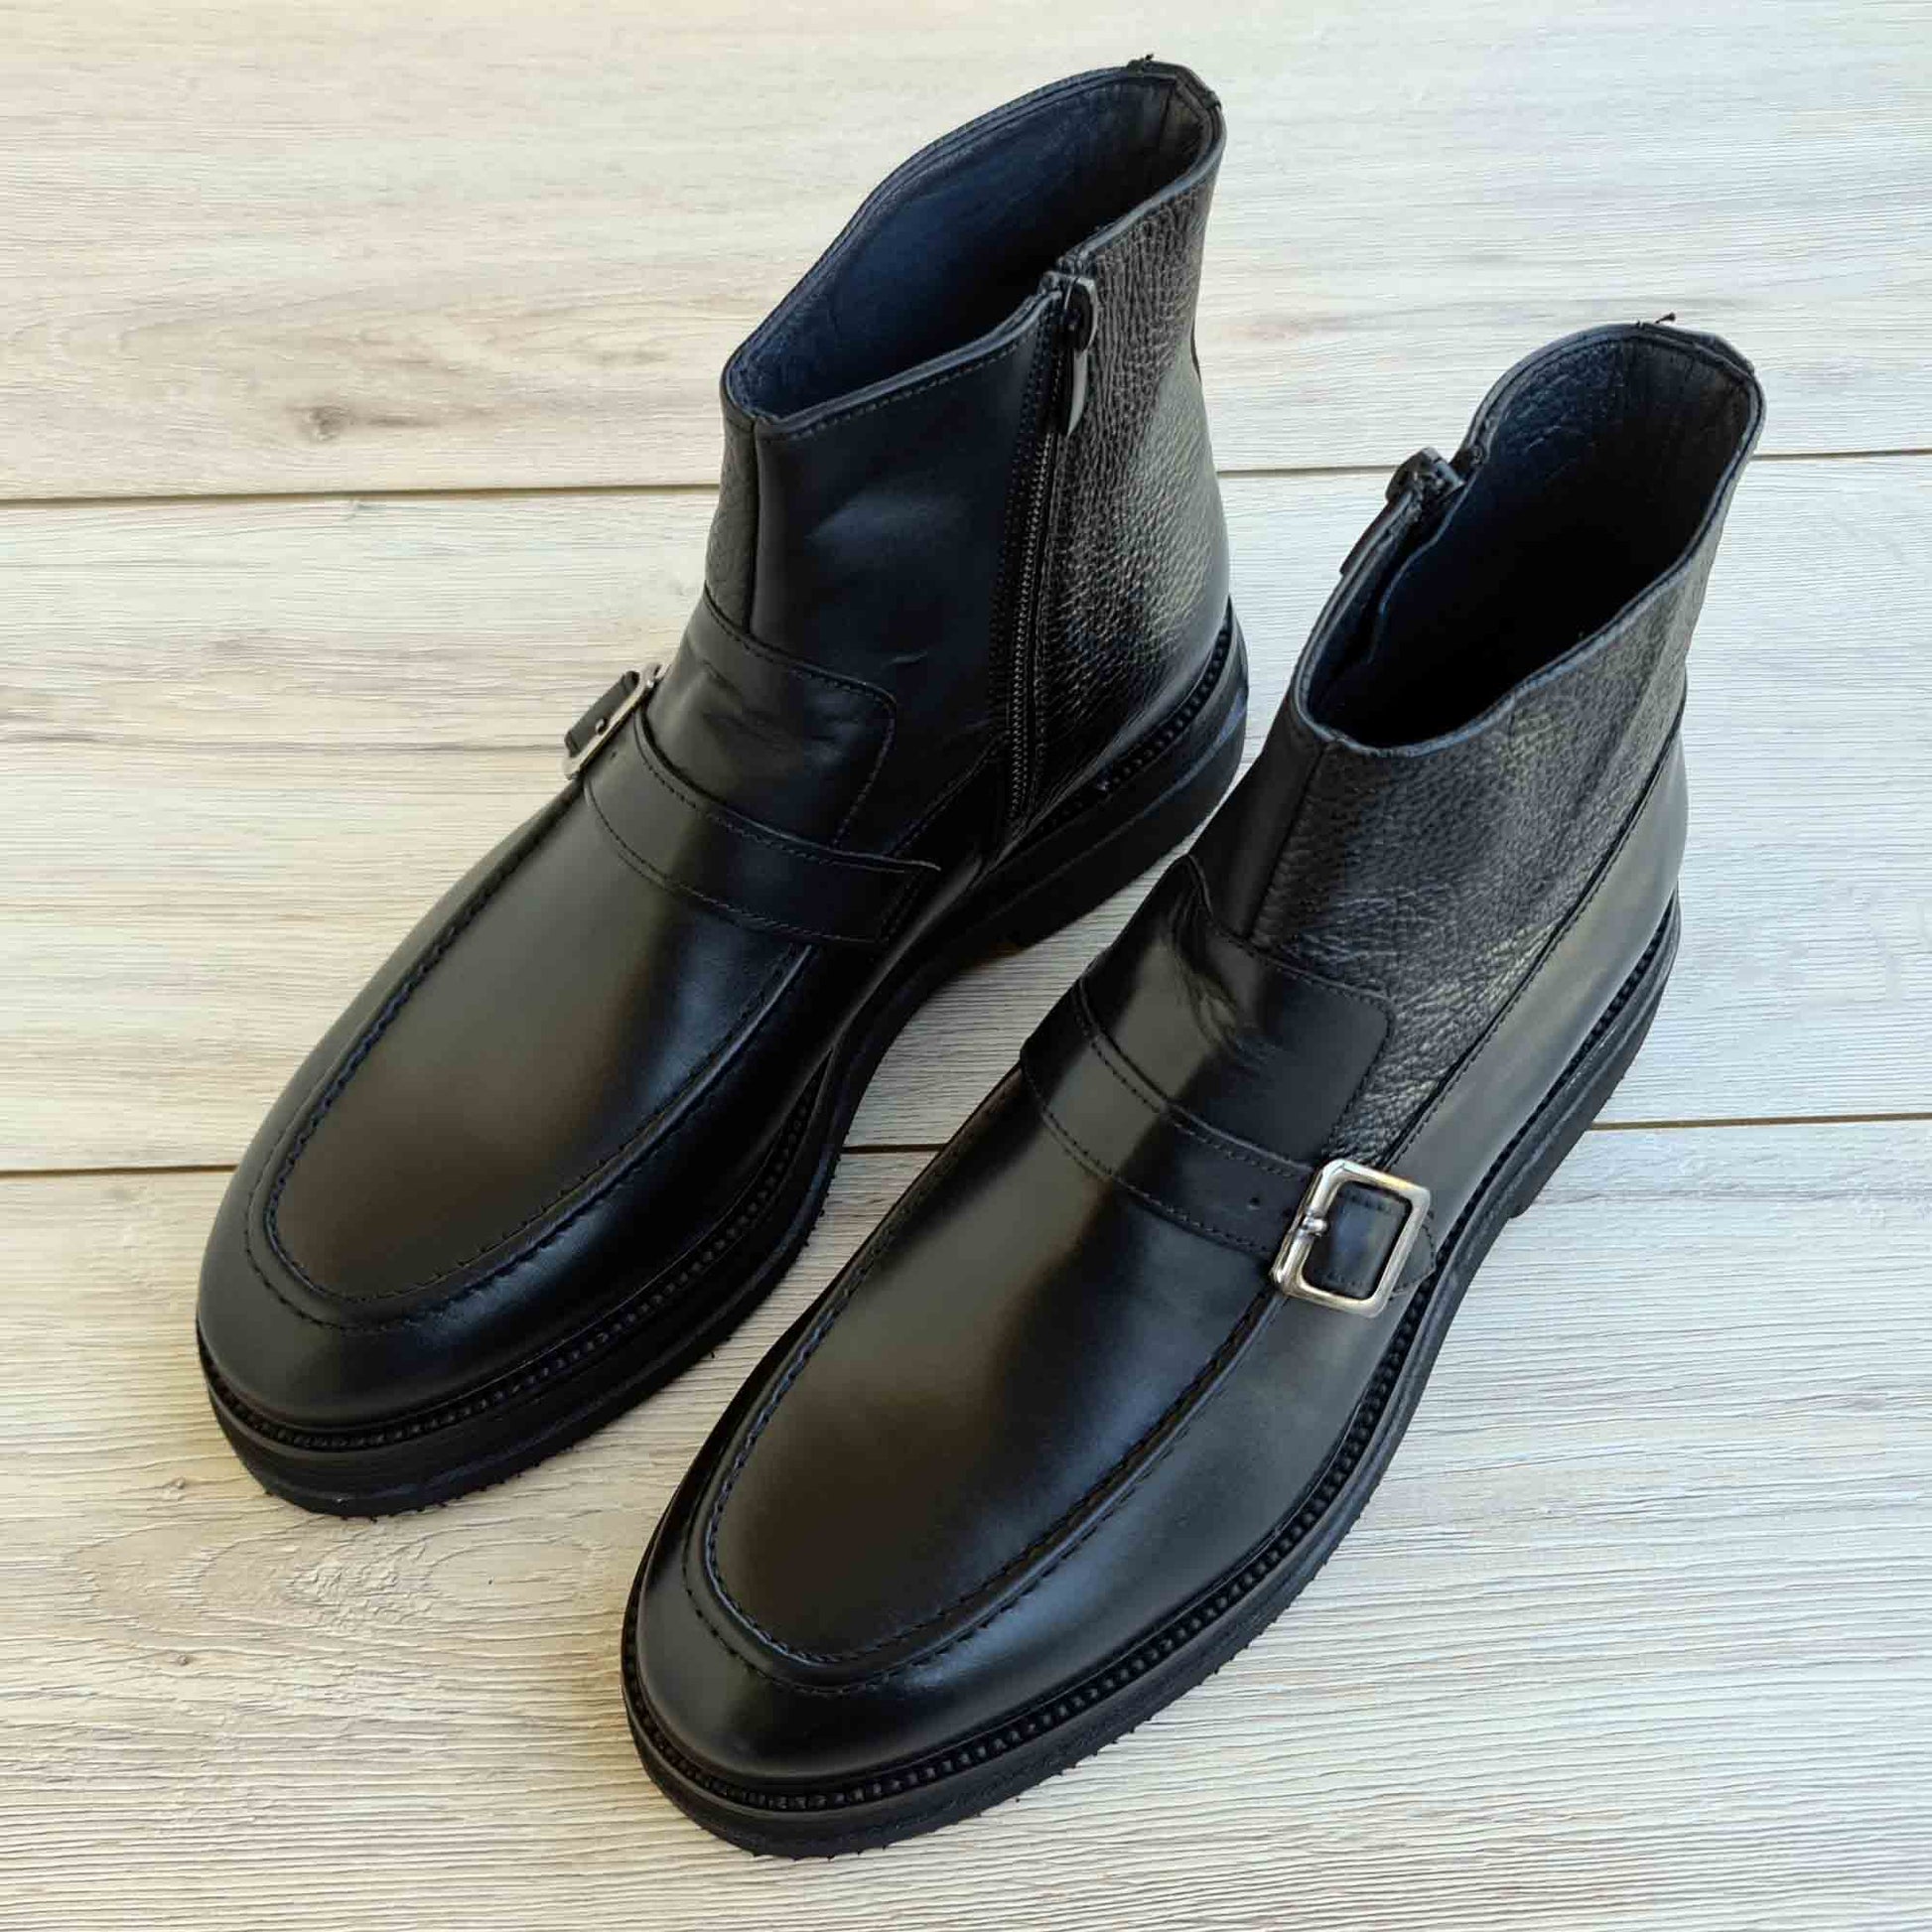 Full Grain Leather High Sole Zip-up Men's Boots